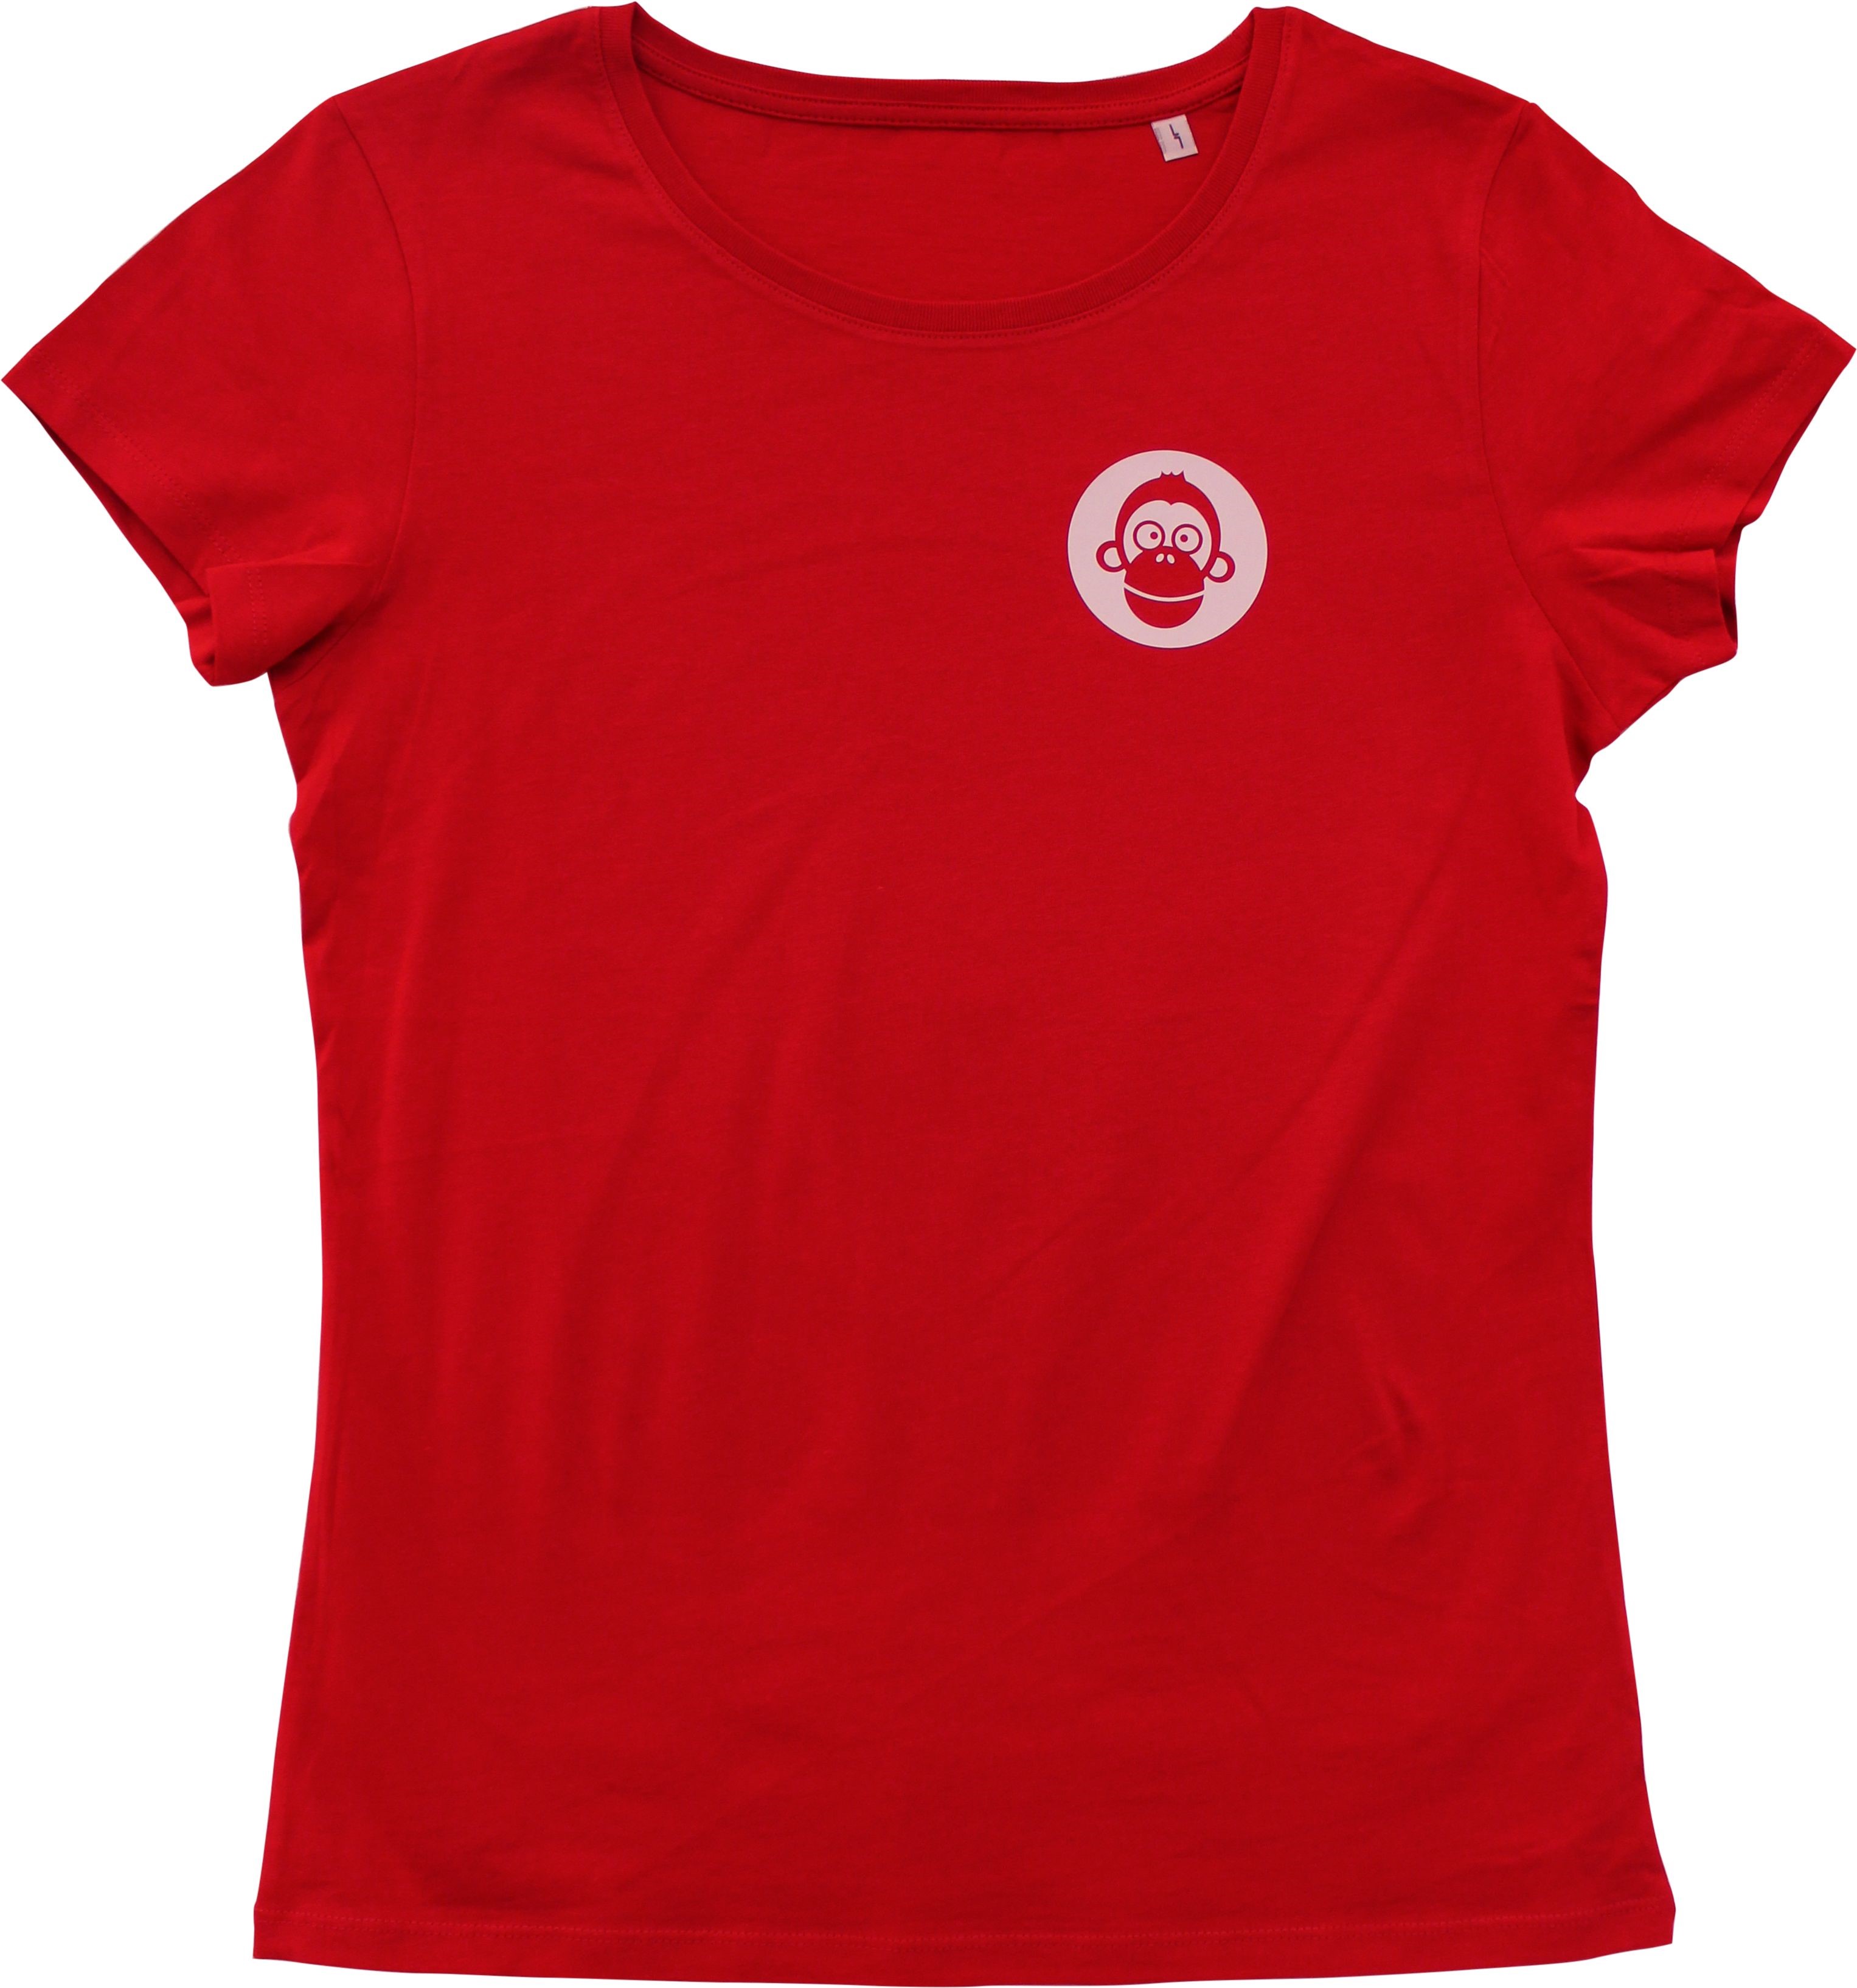 Blömboom - T-Shirt (rot, Größe: S Herren)